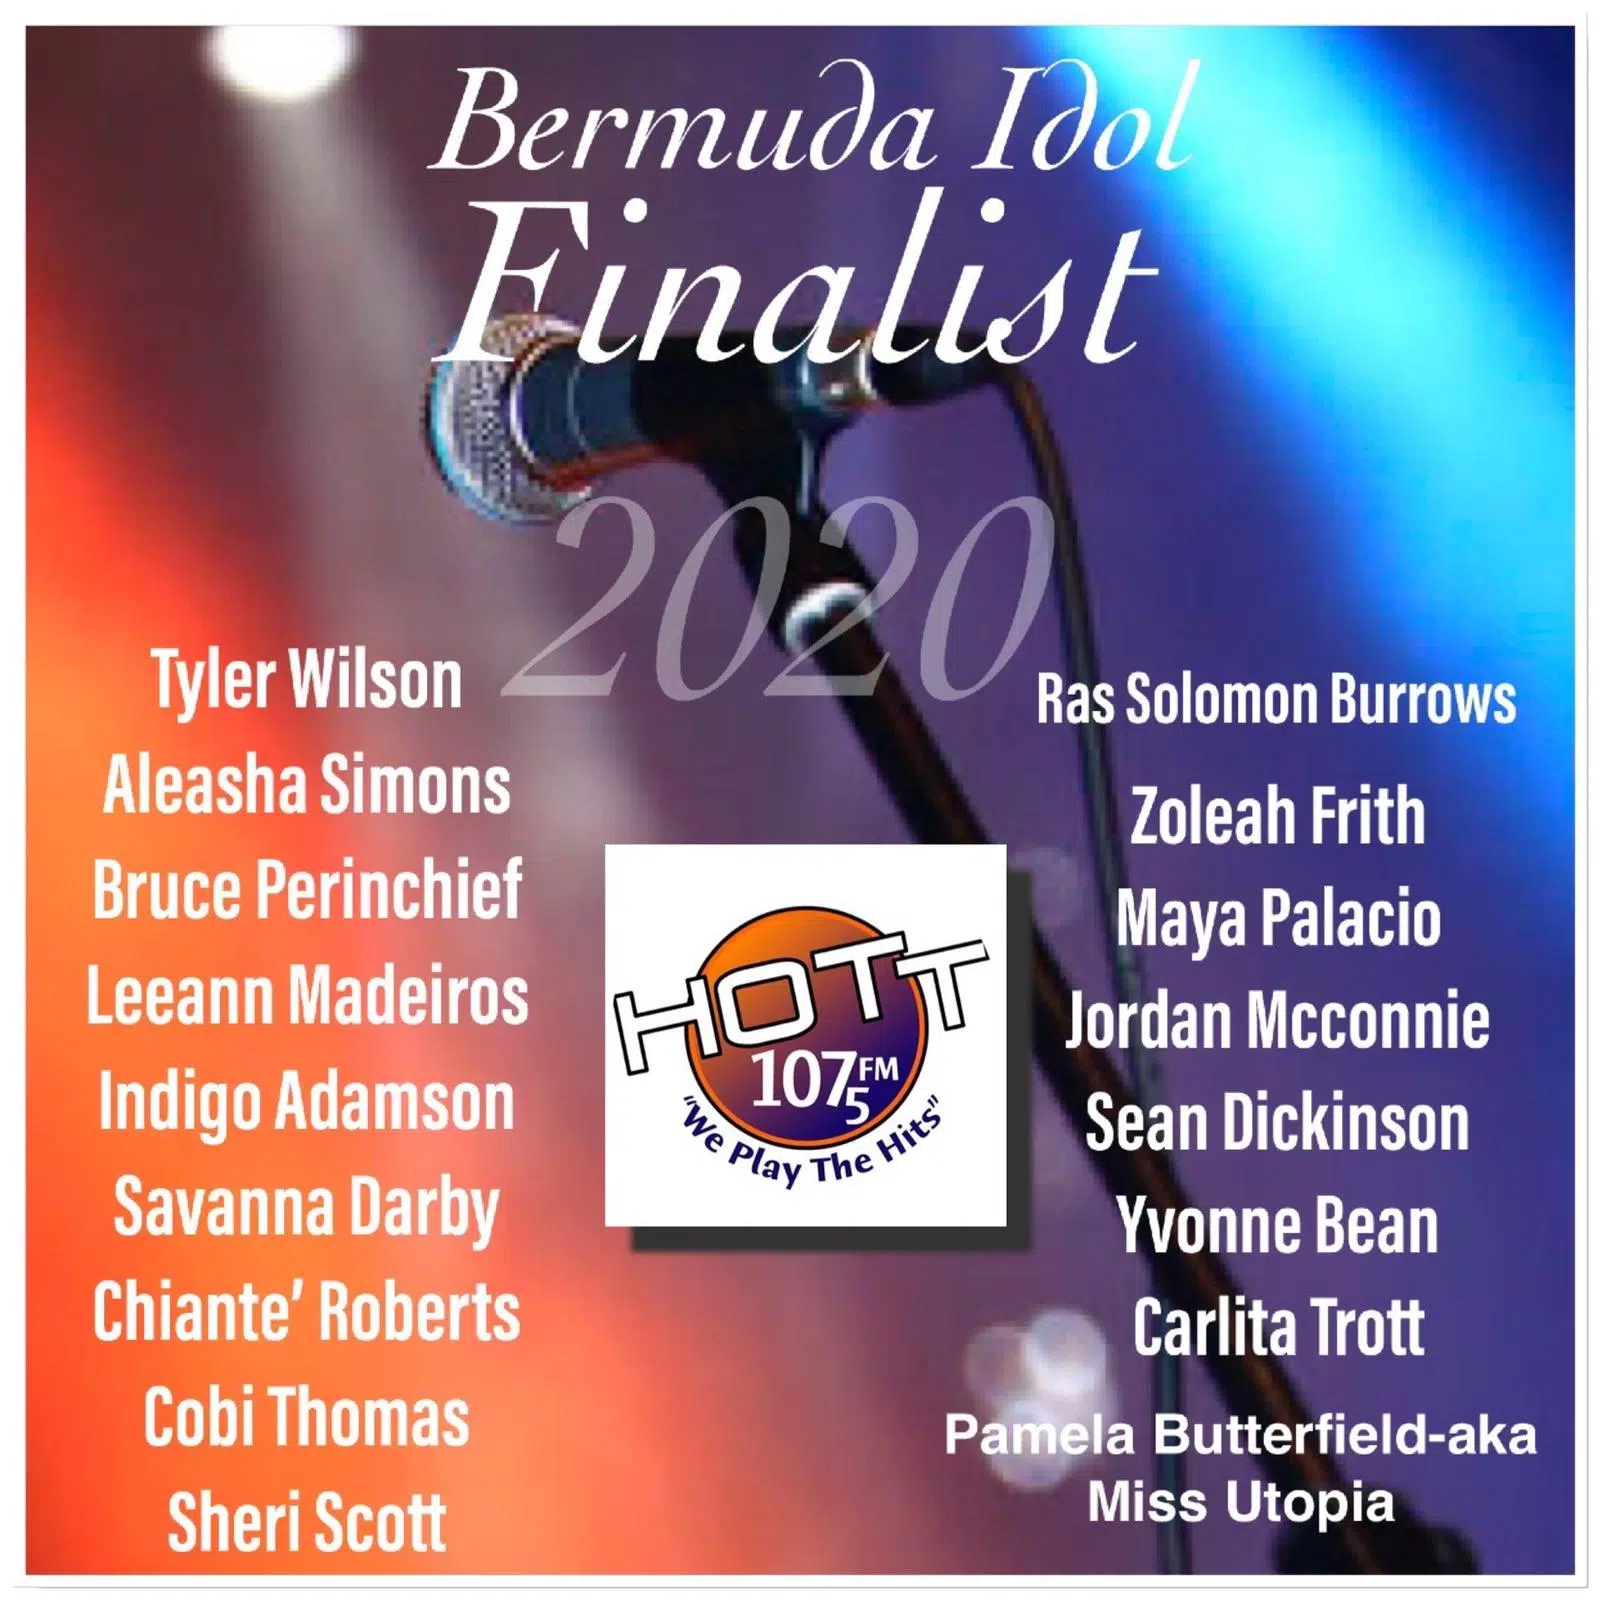 Bermuda Idol 2020 Finalists